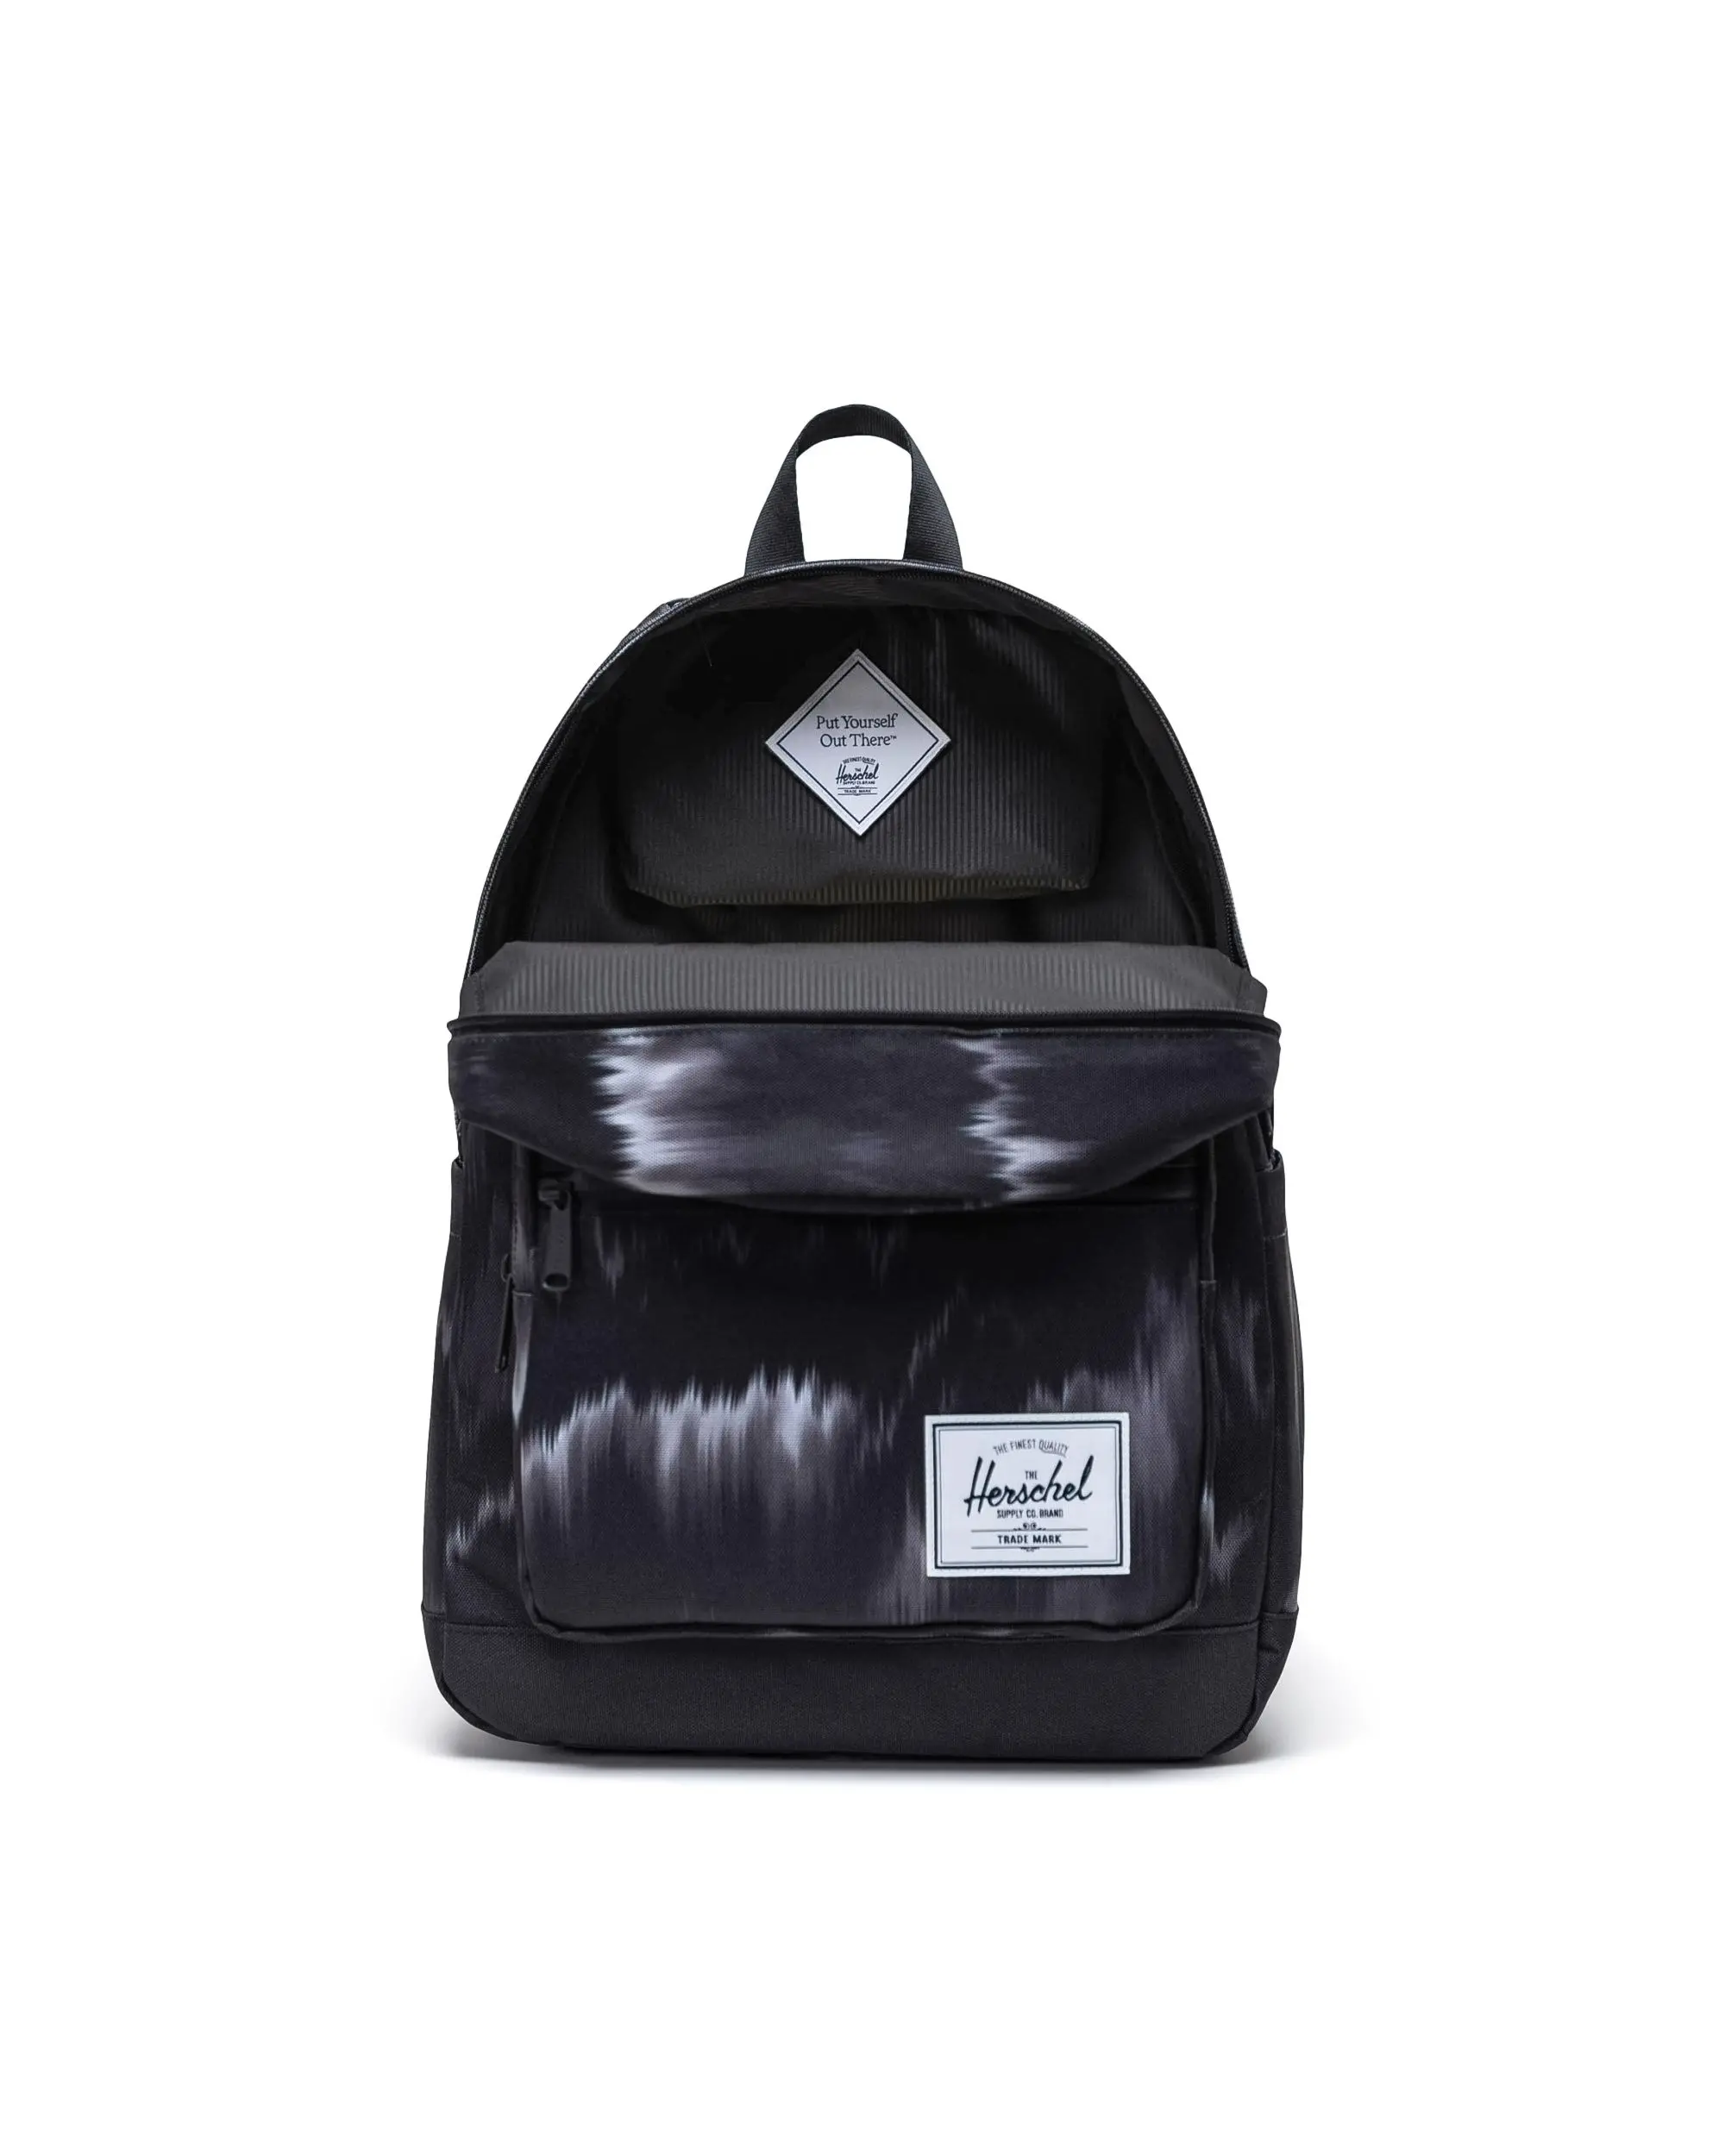 Leather Side Bag - Buy Leather Shoulder Bag From Online Store in BD - RAVEN